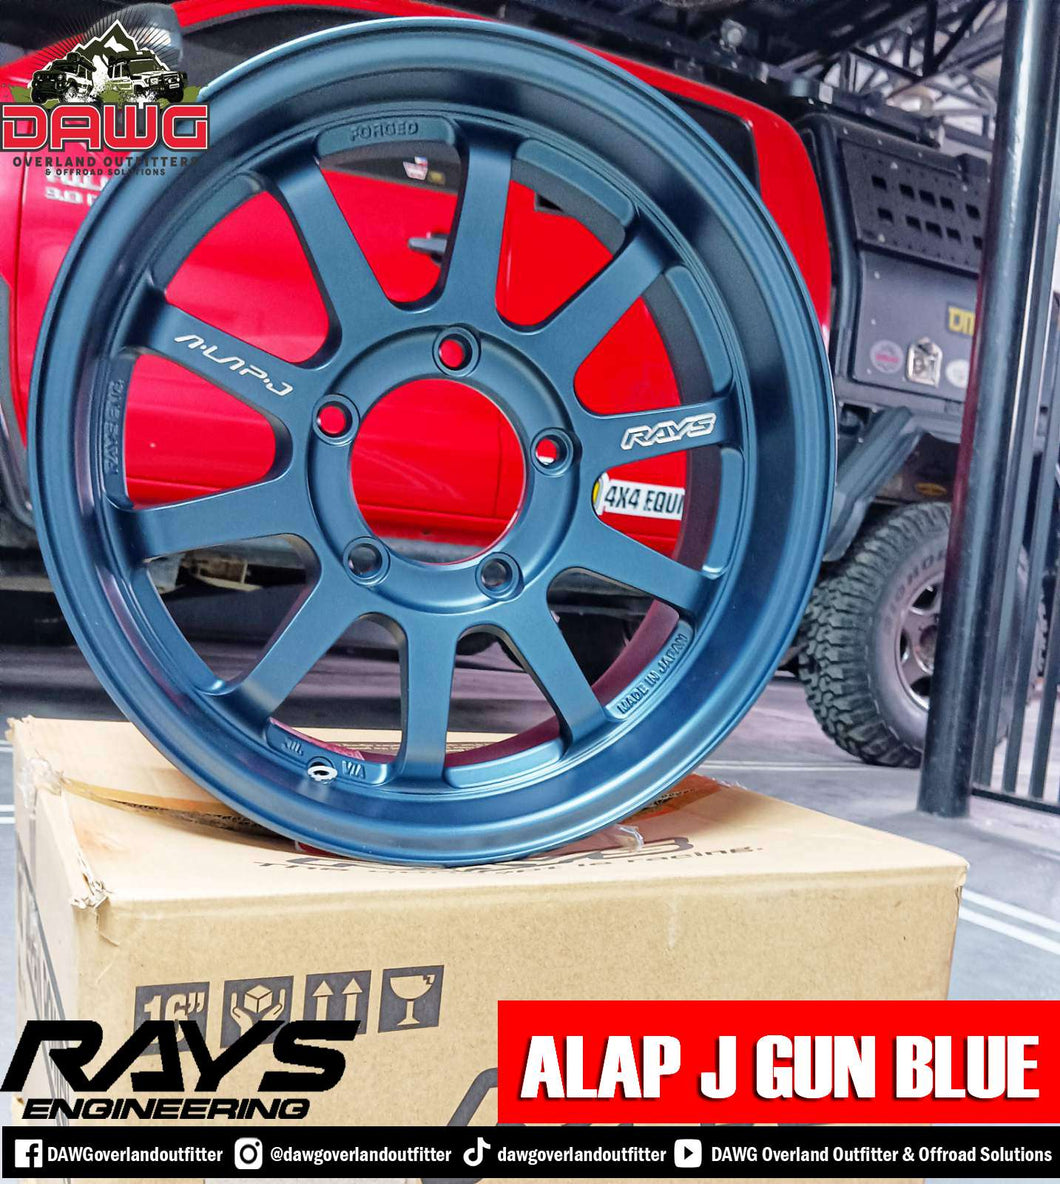 Volk Rays Alap J Forged Gun Blue set of 5 (Gun Blue)